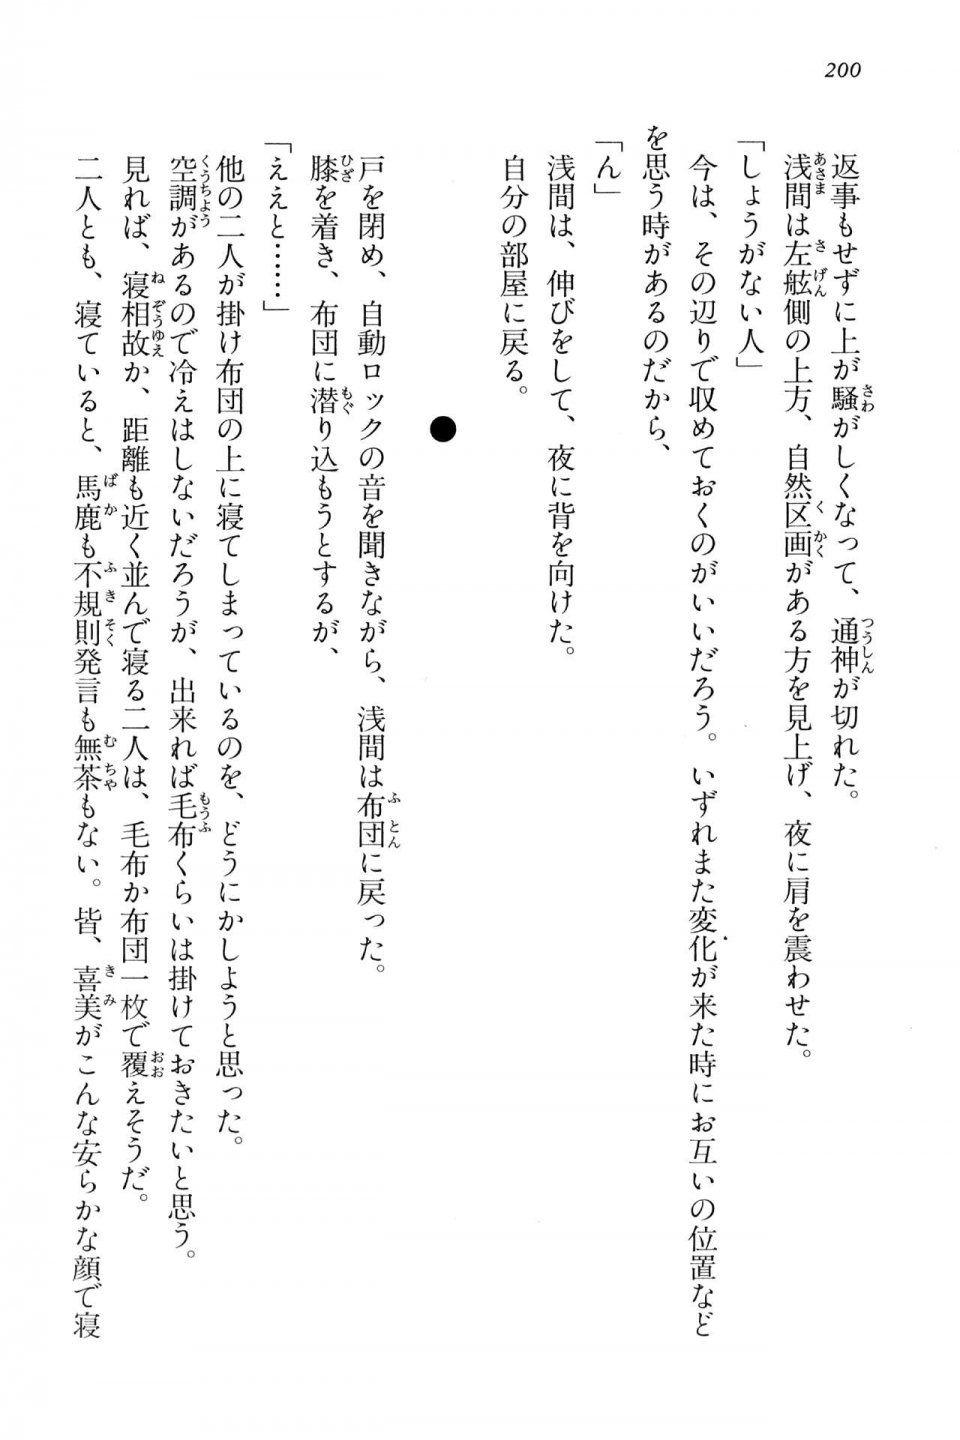 Kyoukai Senjou no Horizon BD Special Mininovel Vol 4(2B) - Photo #204